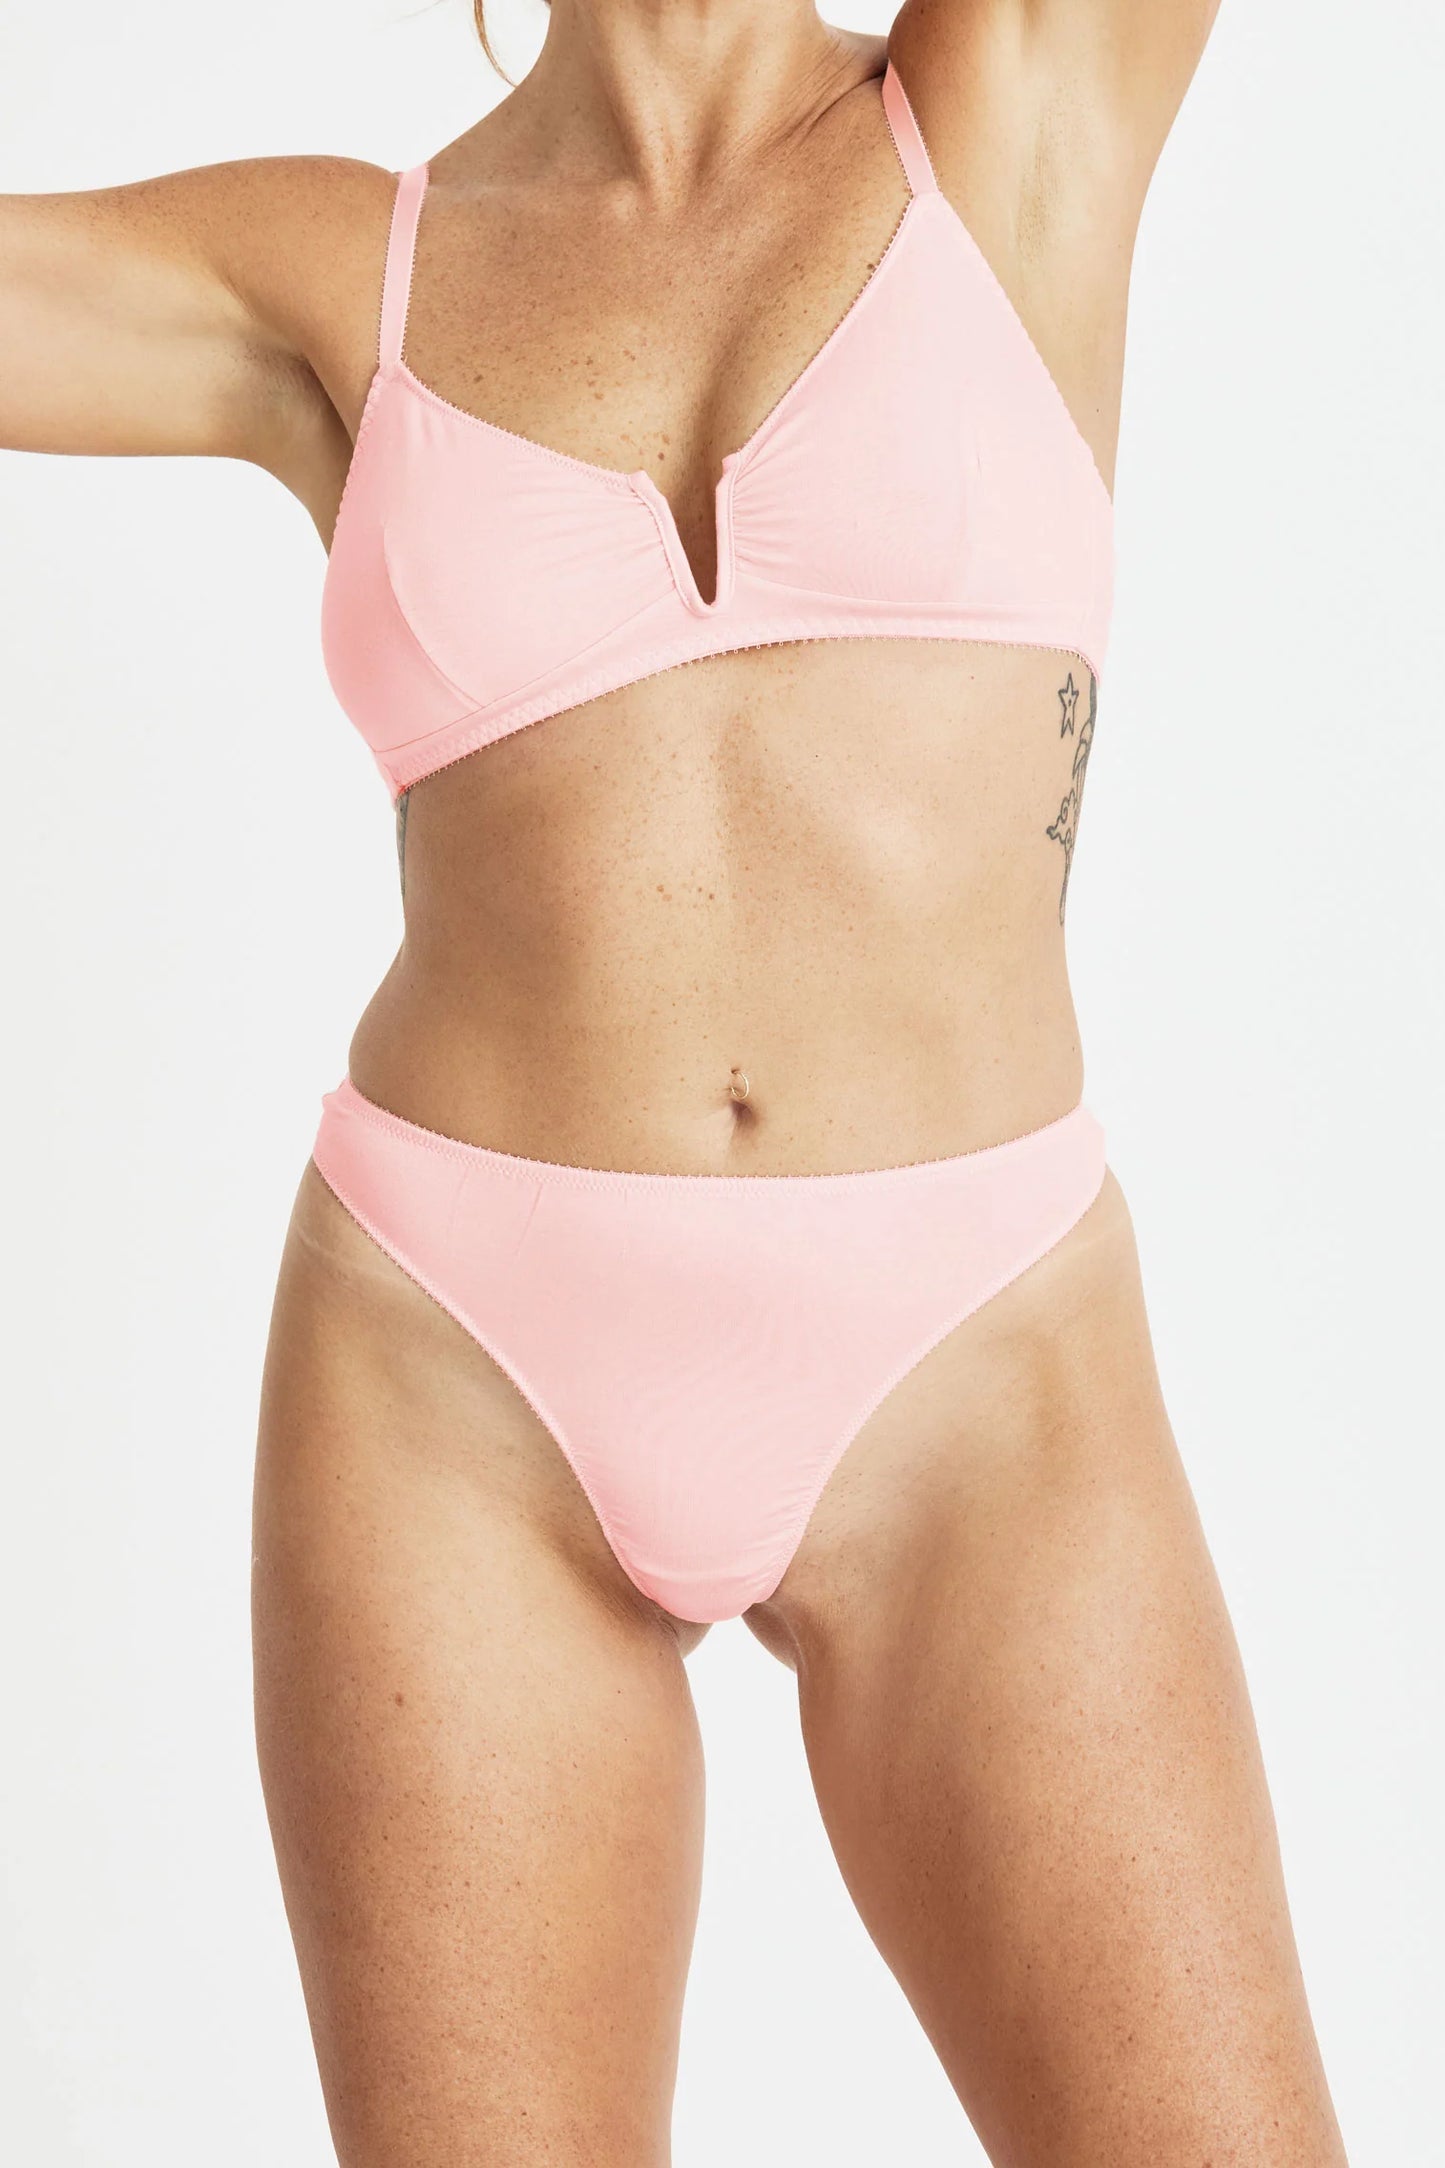 Videris Whitney Bikini - Rosy